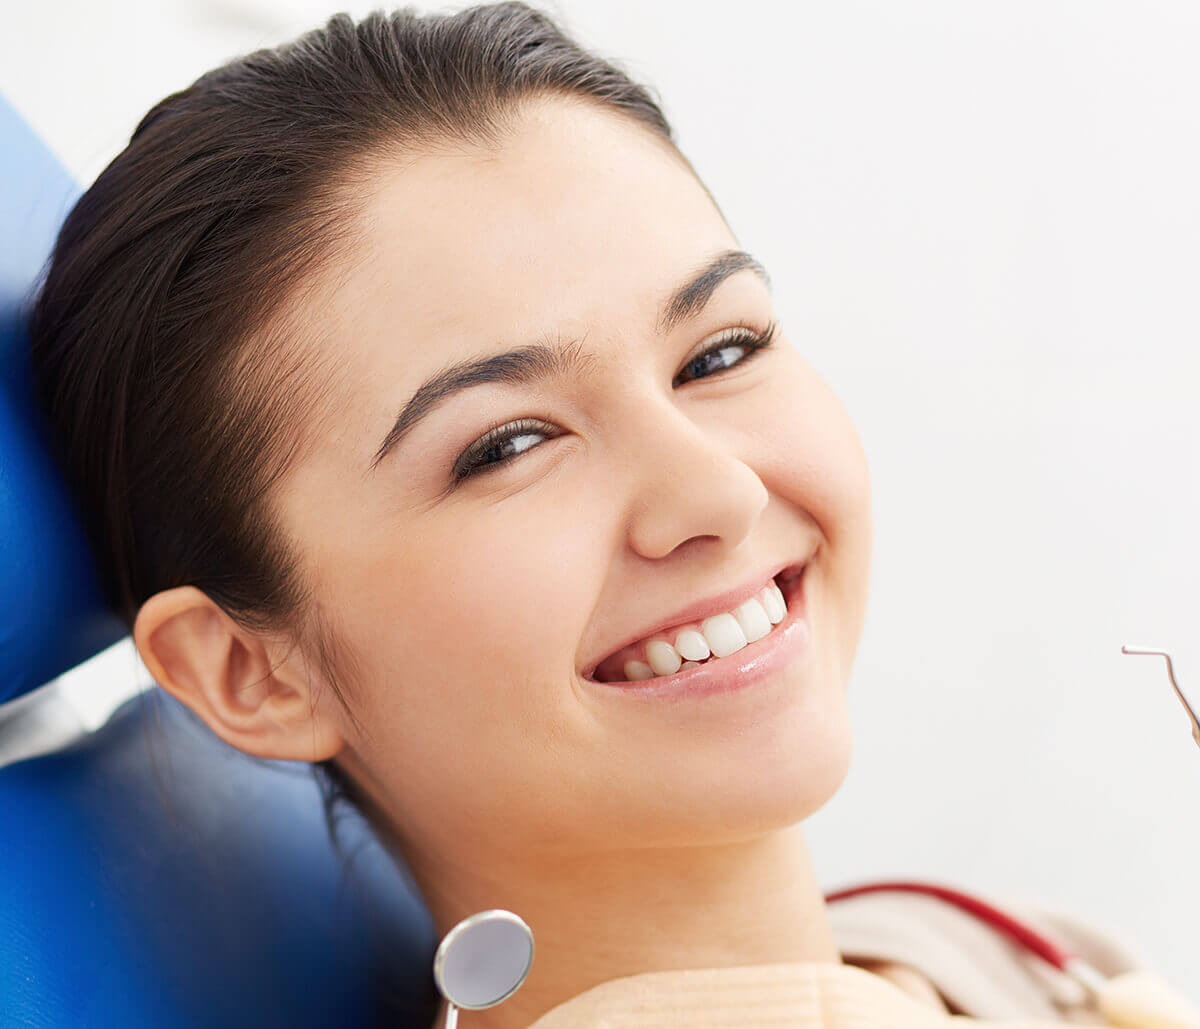 Dental Oral Cancer Screening Services in Cincinnati OH Area